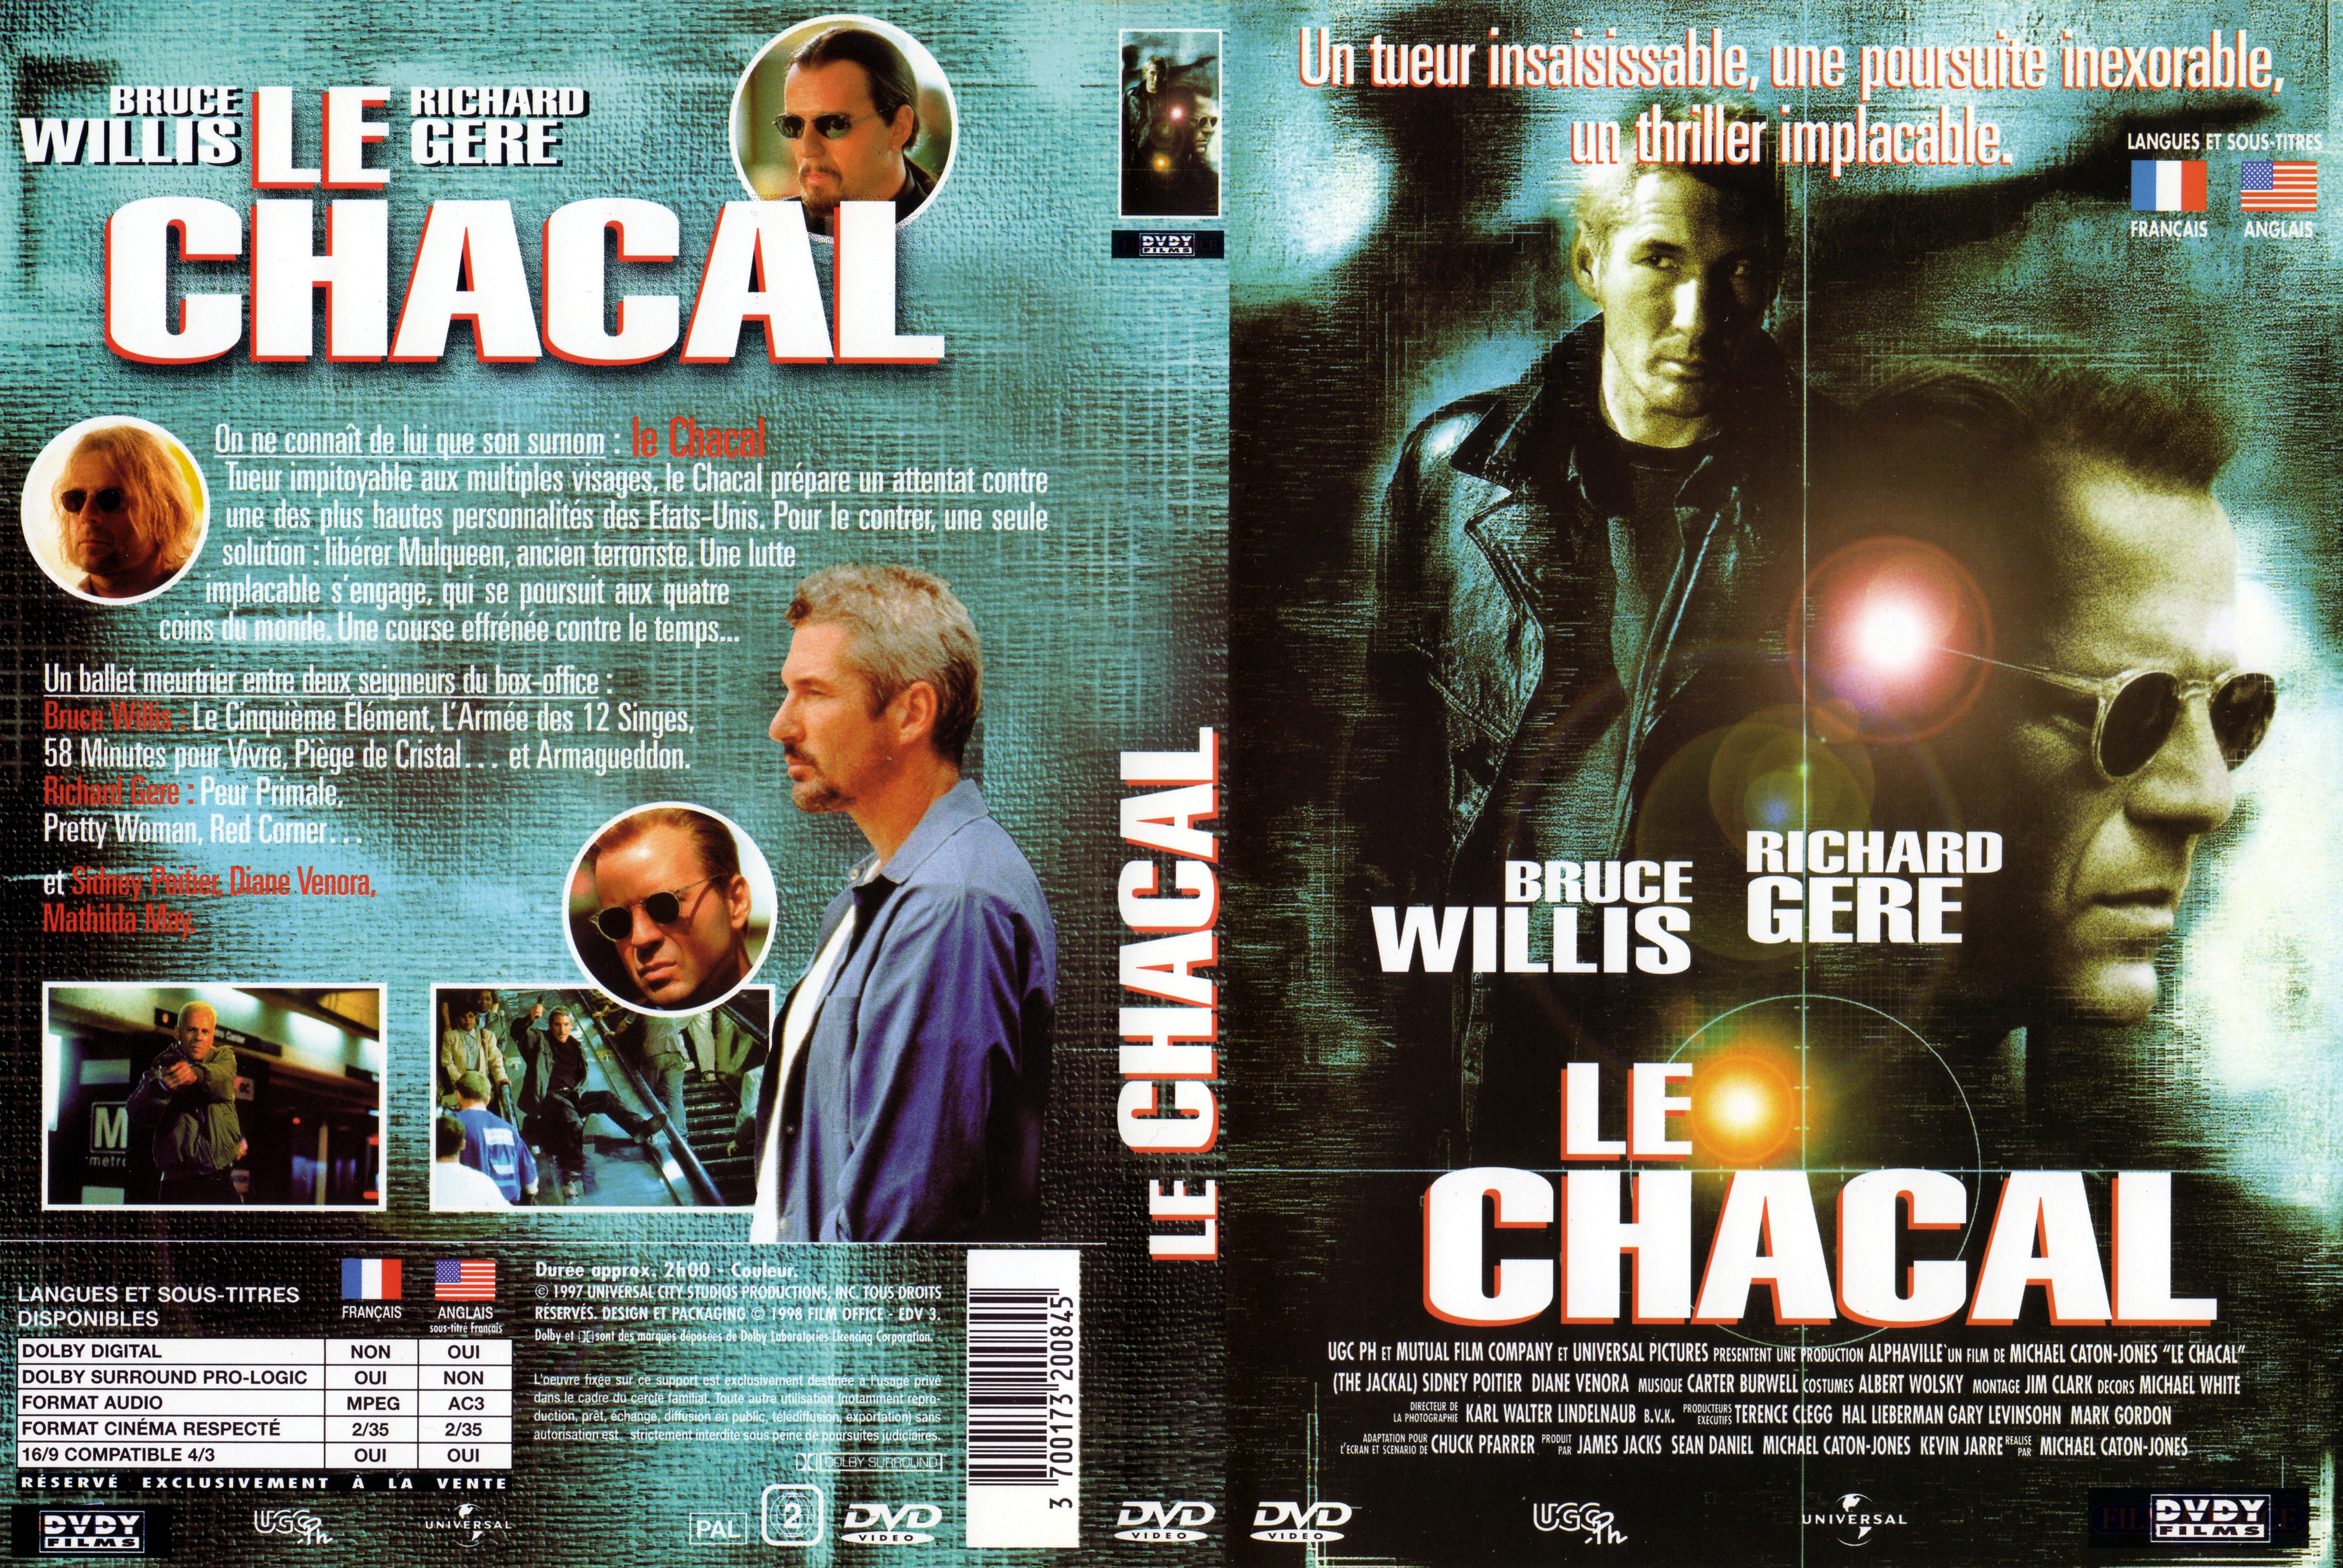 Jaquette DVD Le chacal